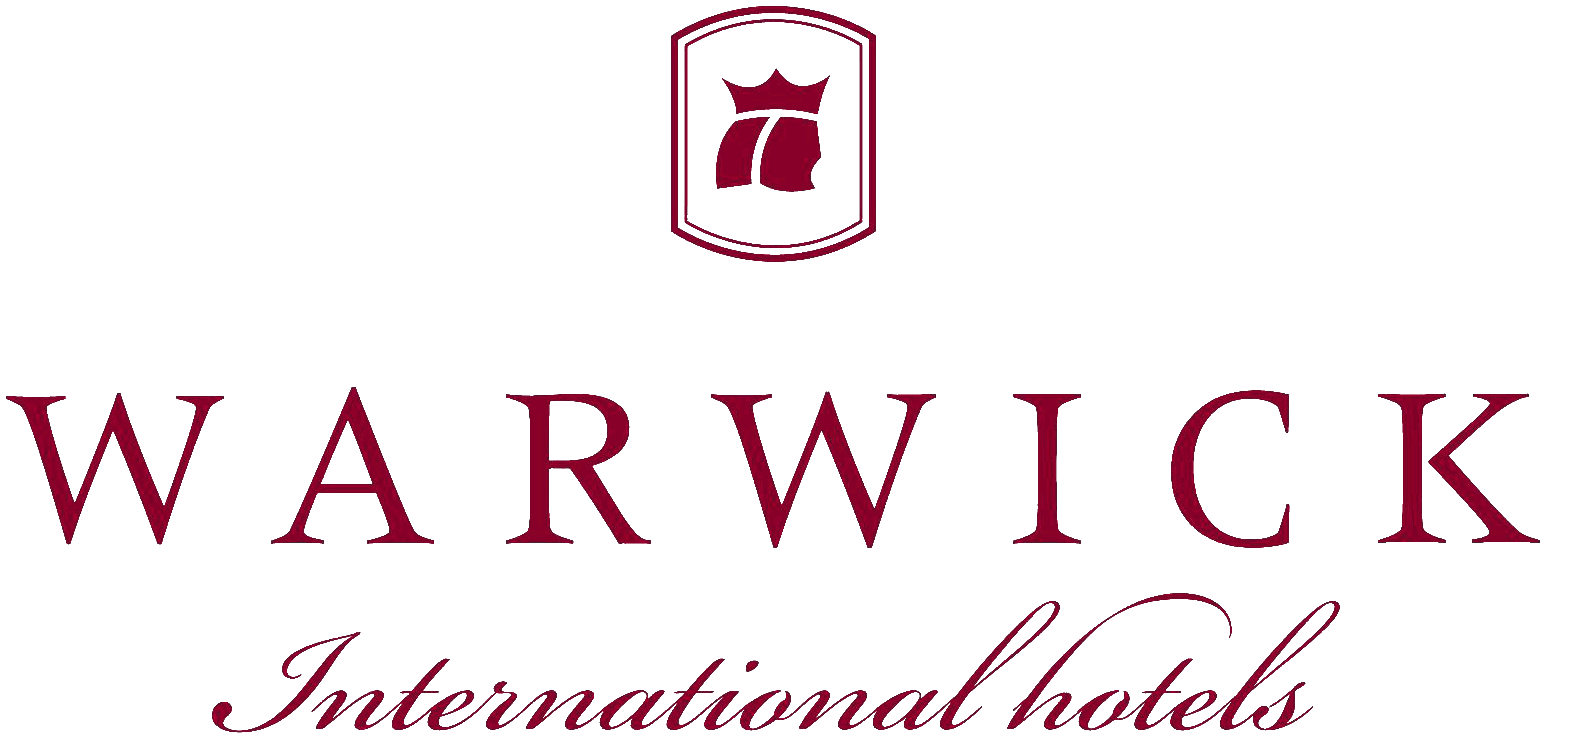 Hotels International Logo - Warwick Hotels & Resorts | Logopedia | FANDOM powered by Wikia